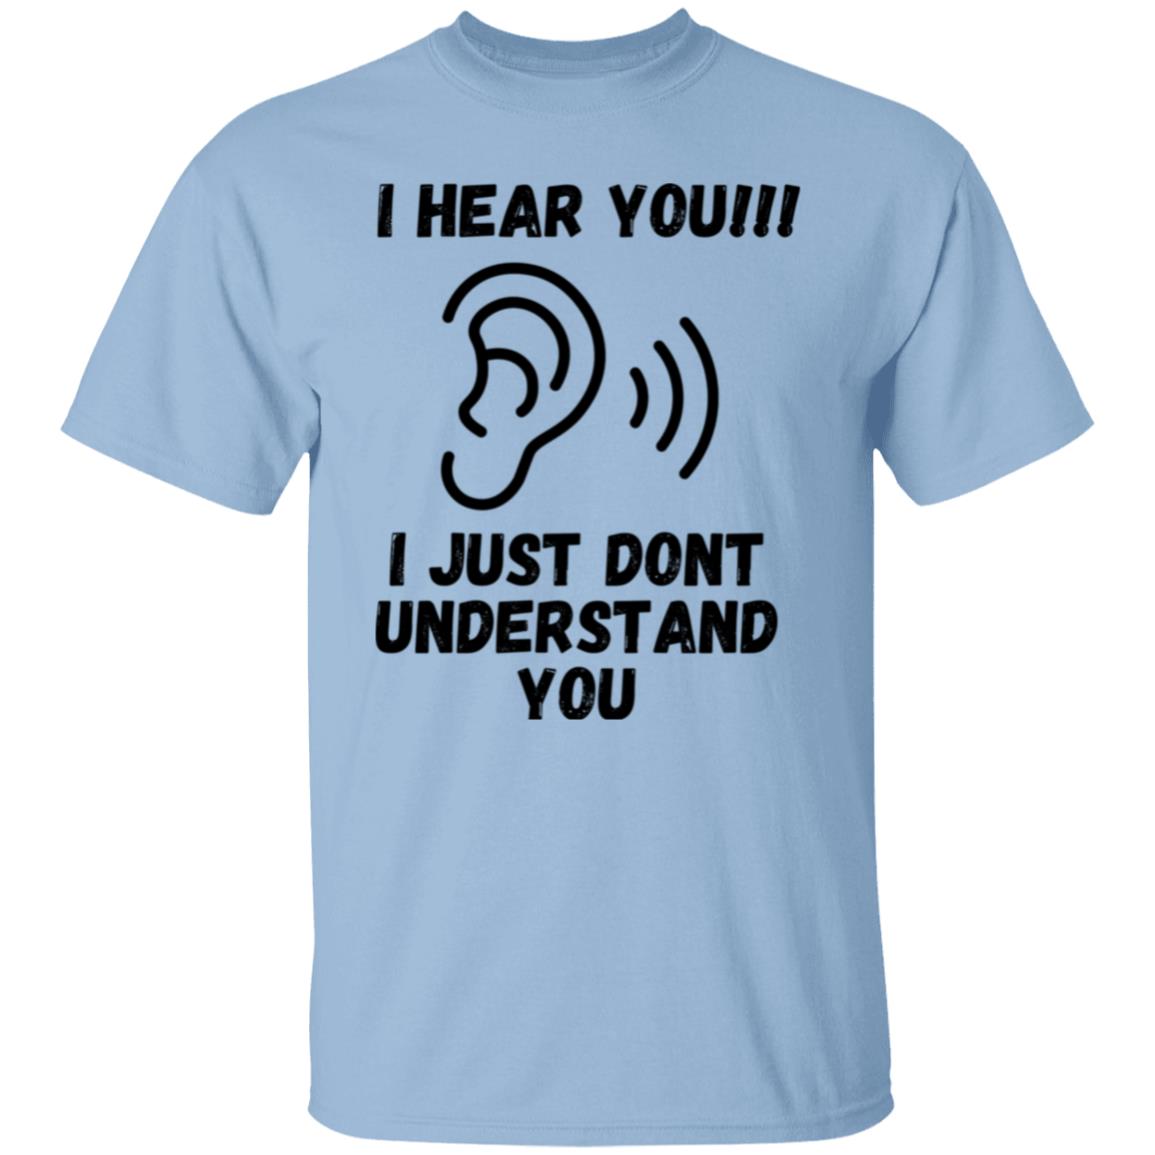 I HEAR YOU!!! (UNISEX)  T-Shirt